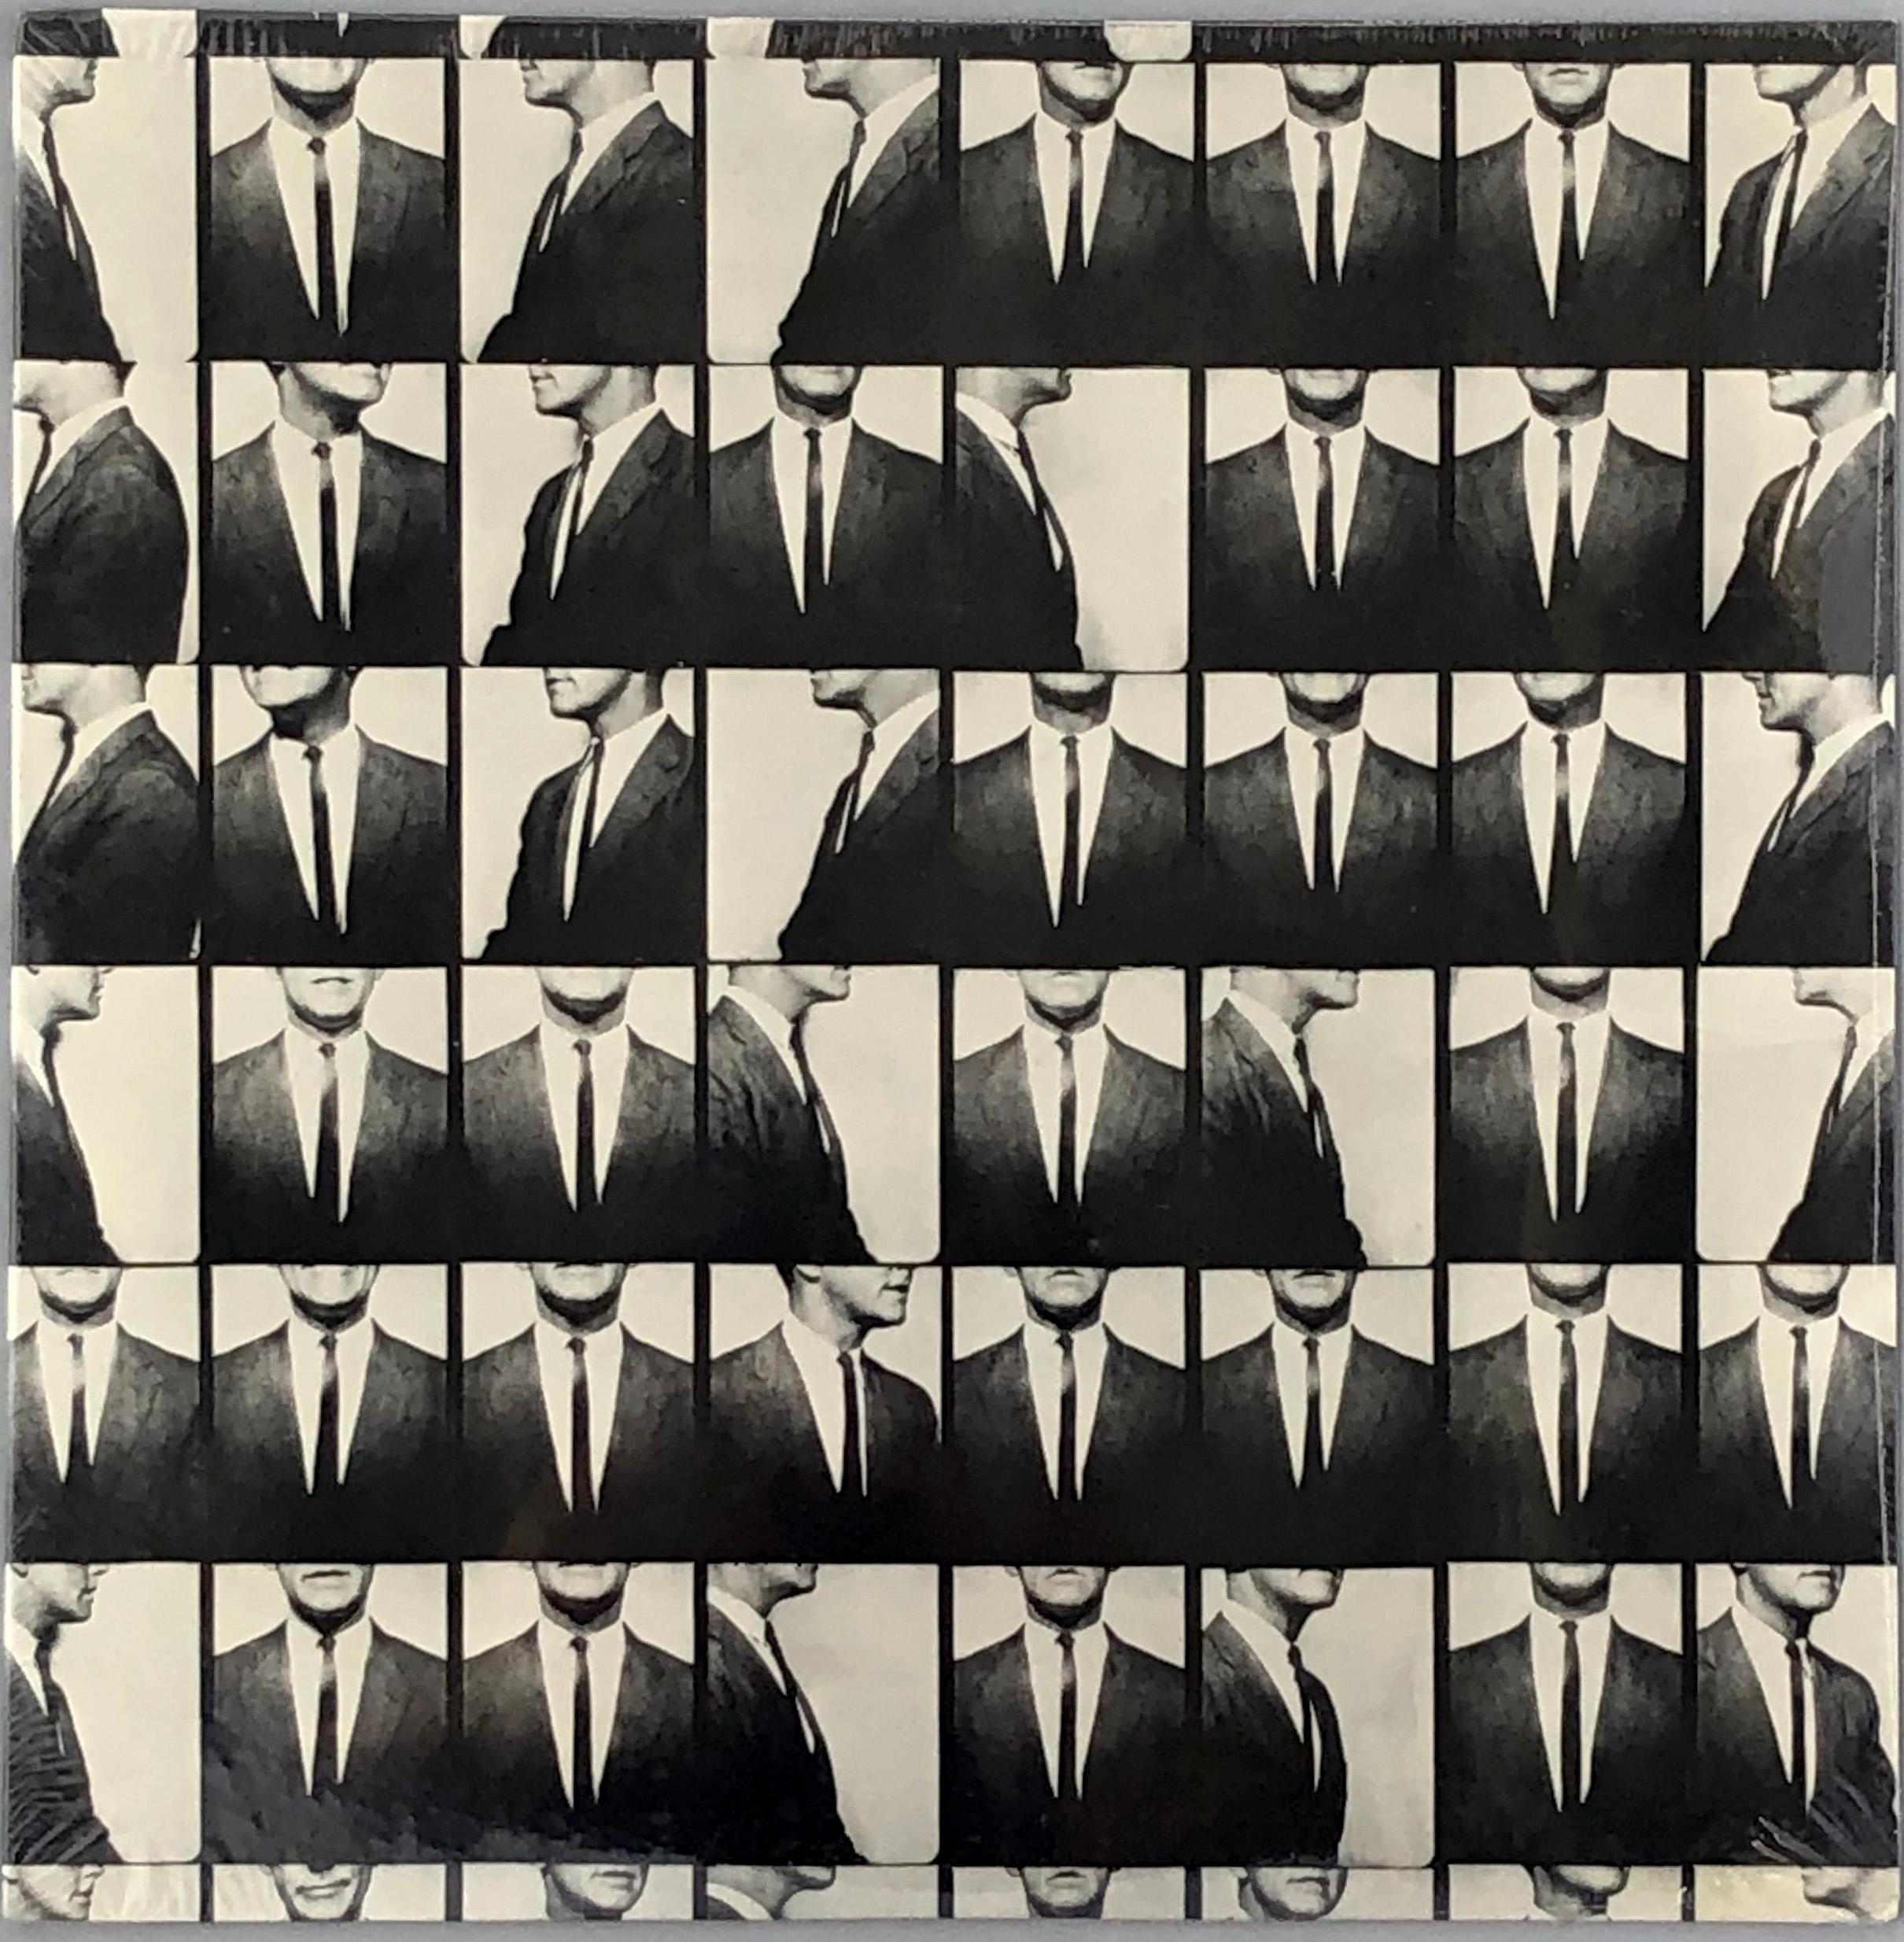 Rare original Andy Warhol Record Cover Art 1